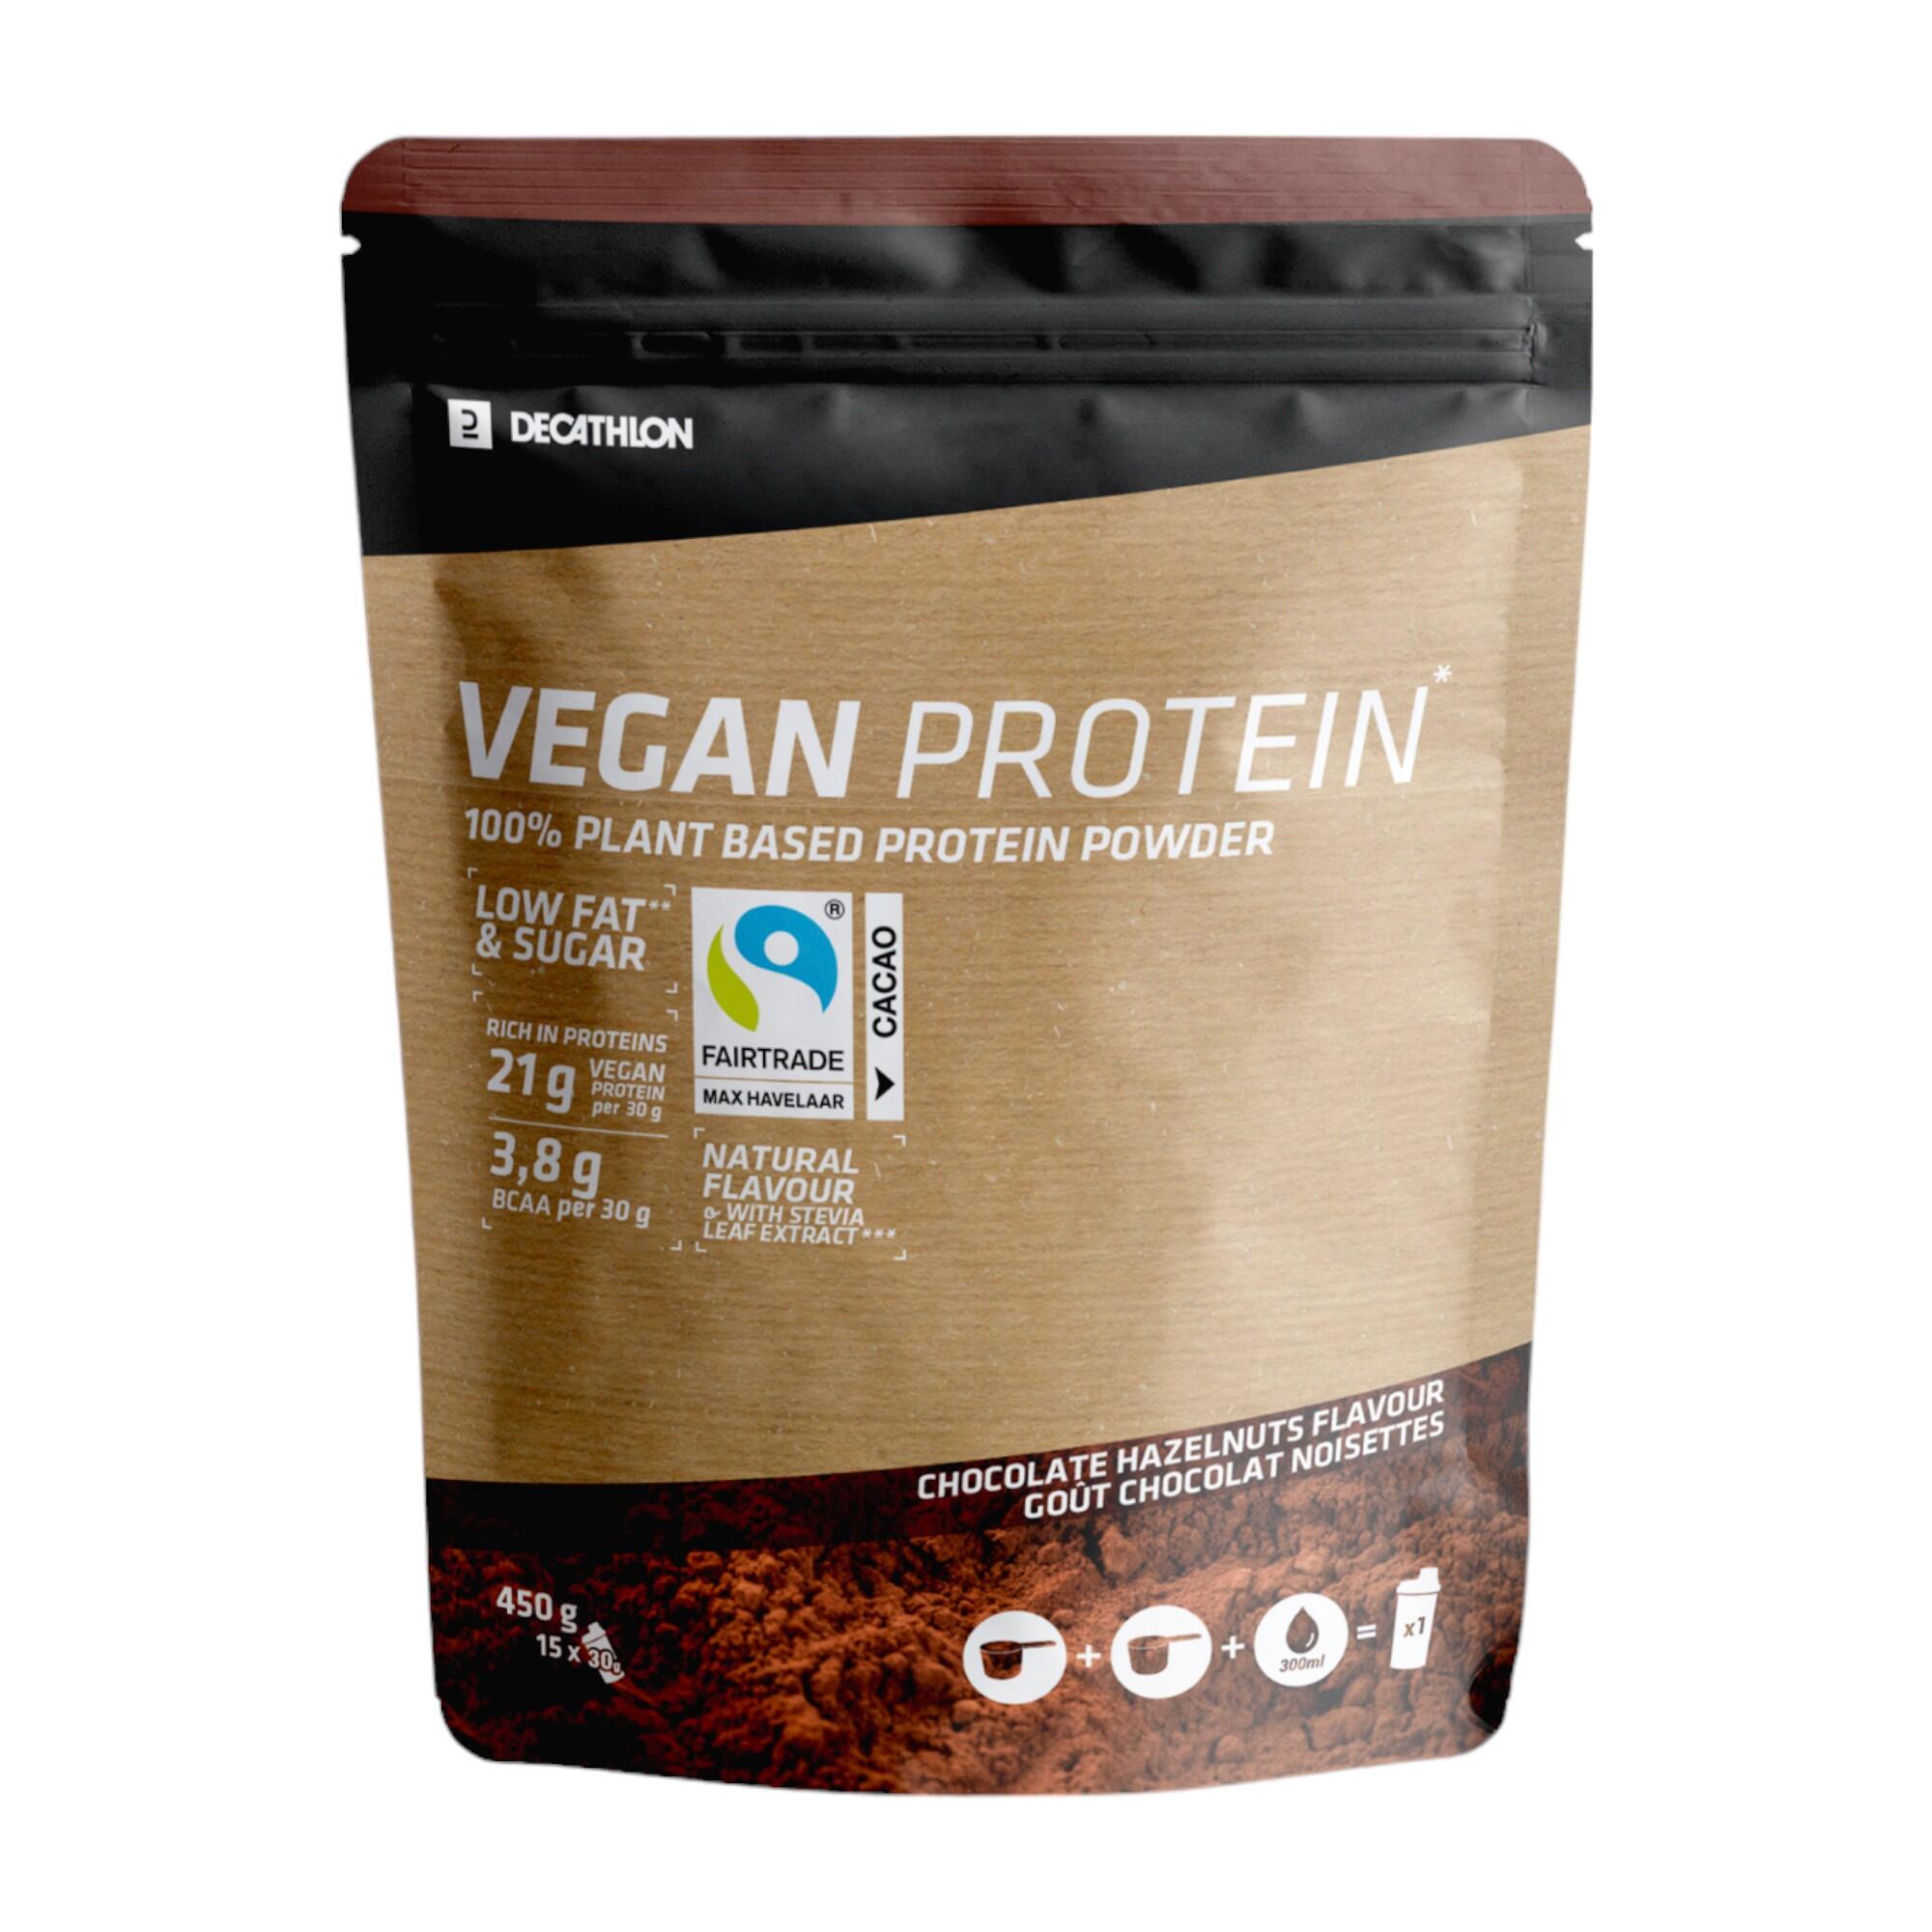 Vegan Proteins Powder